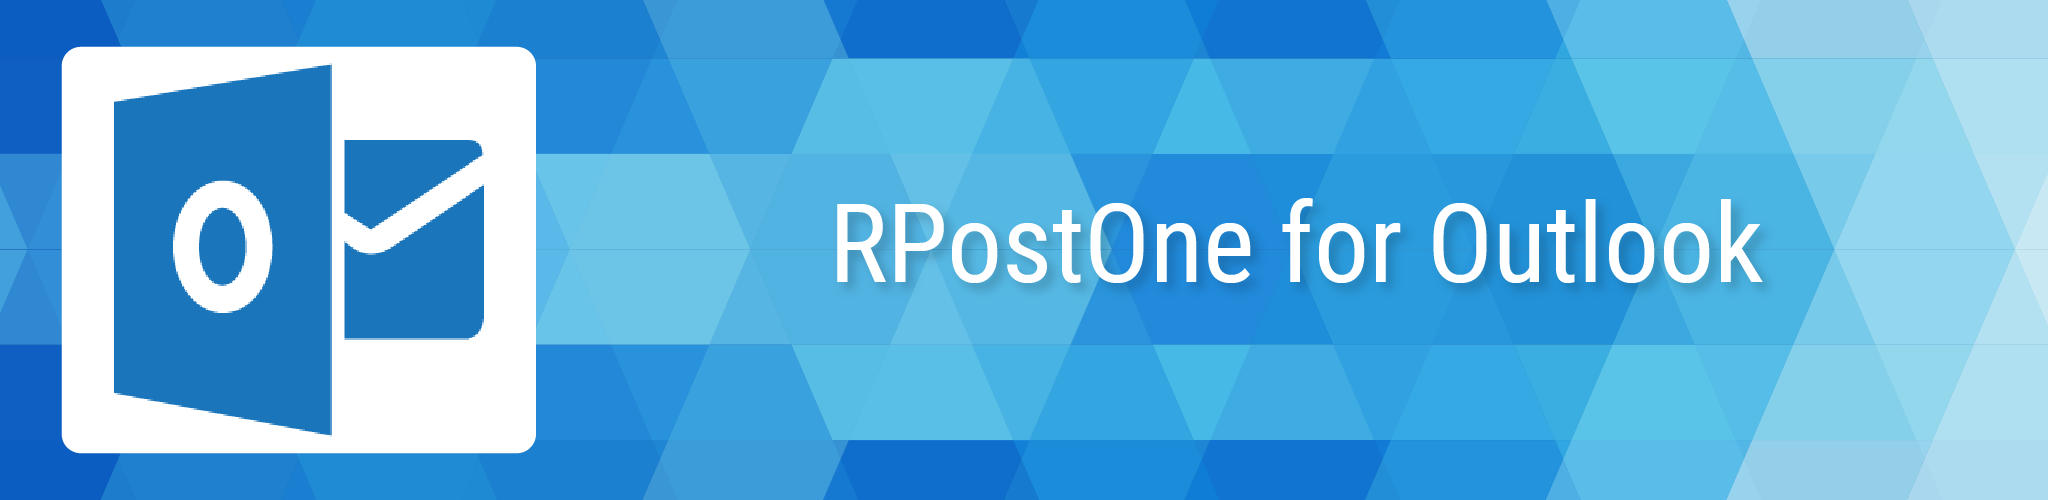 RPostOne for Outlook